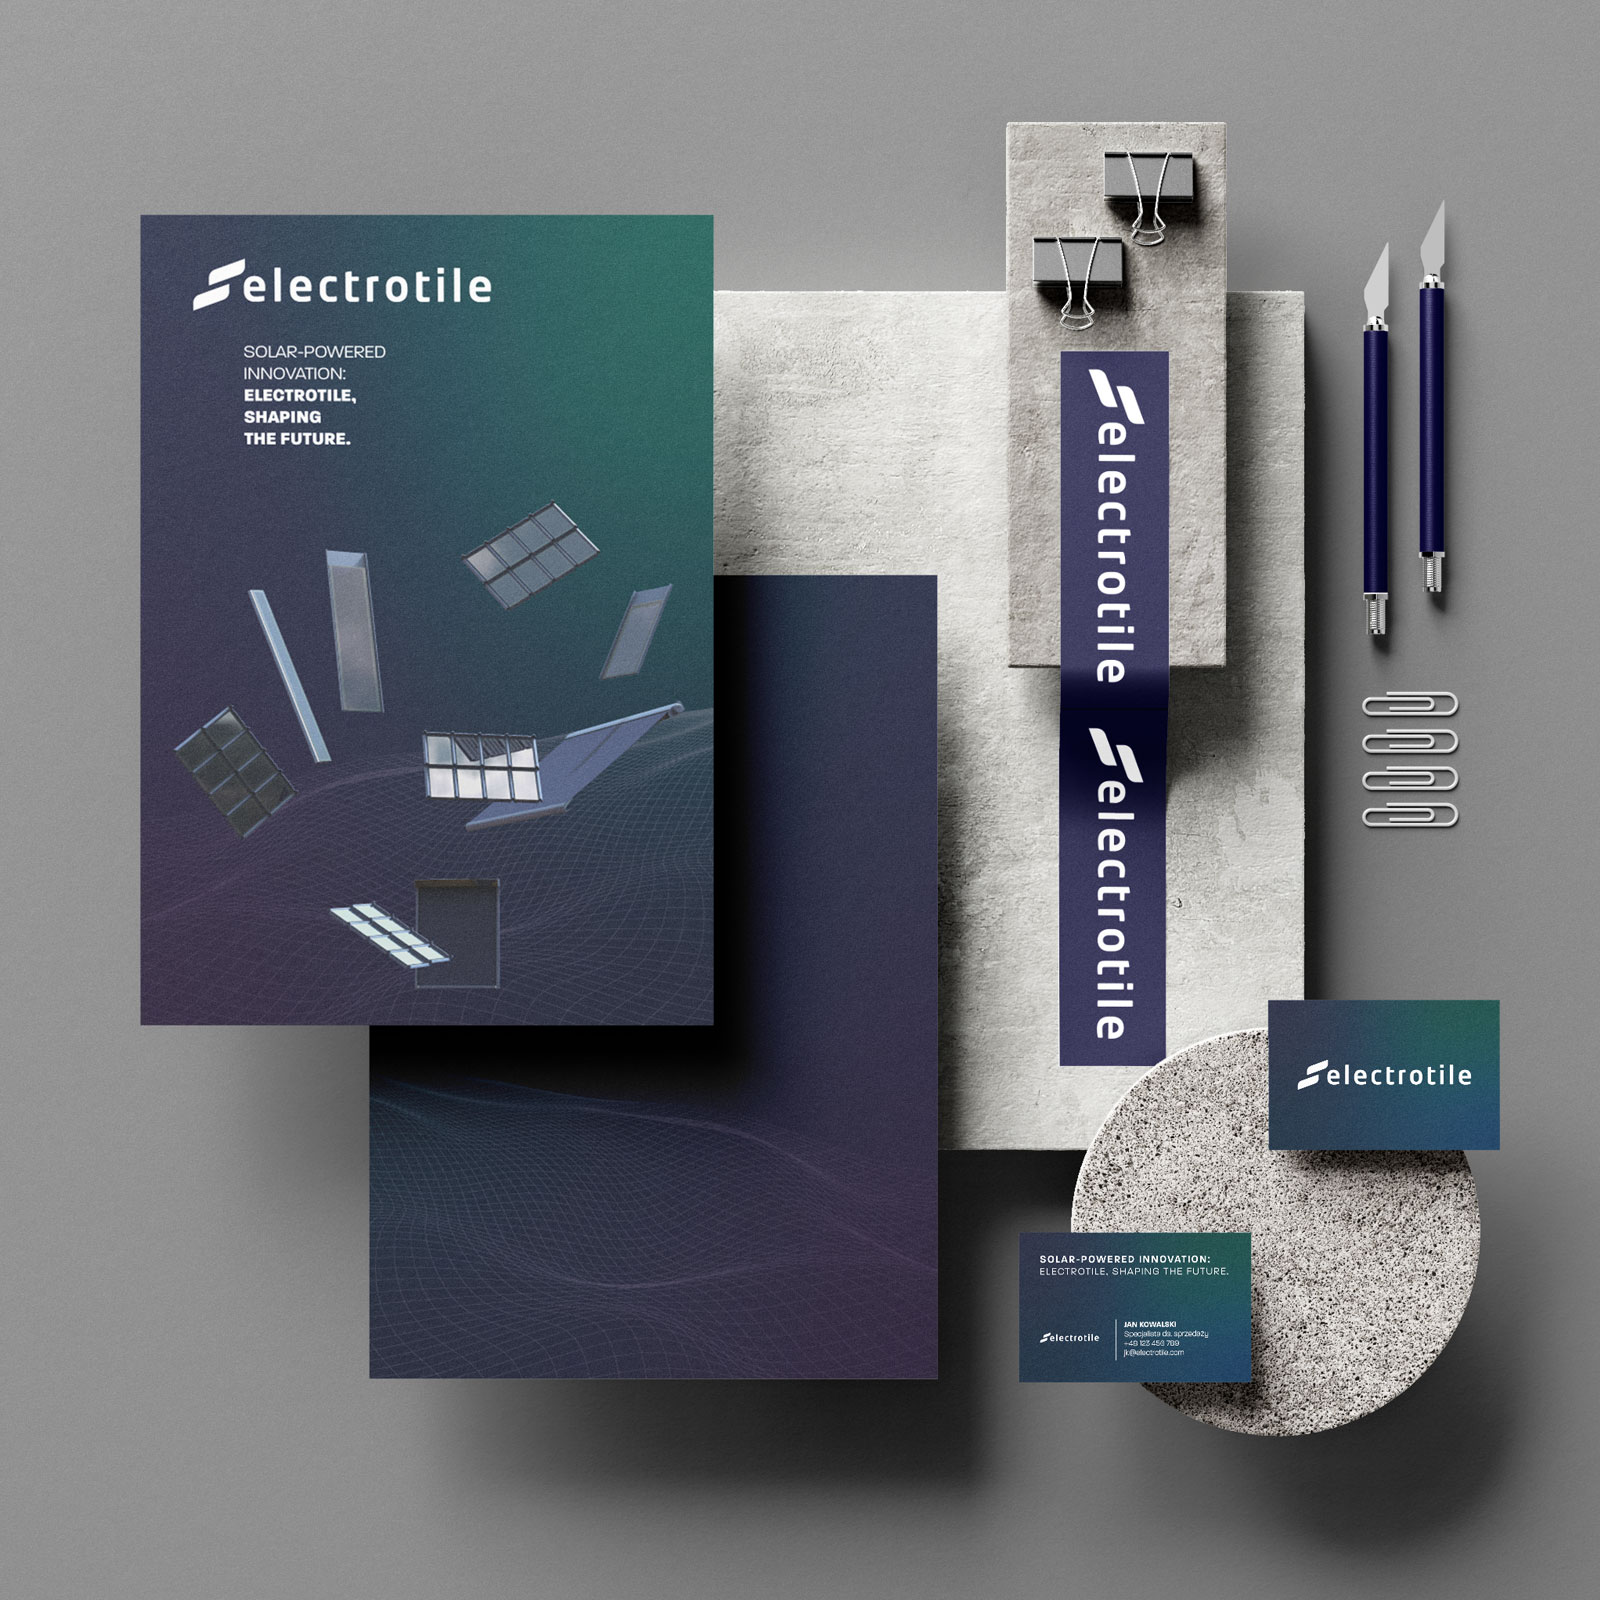 electrotile_branding_materials